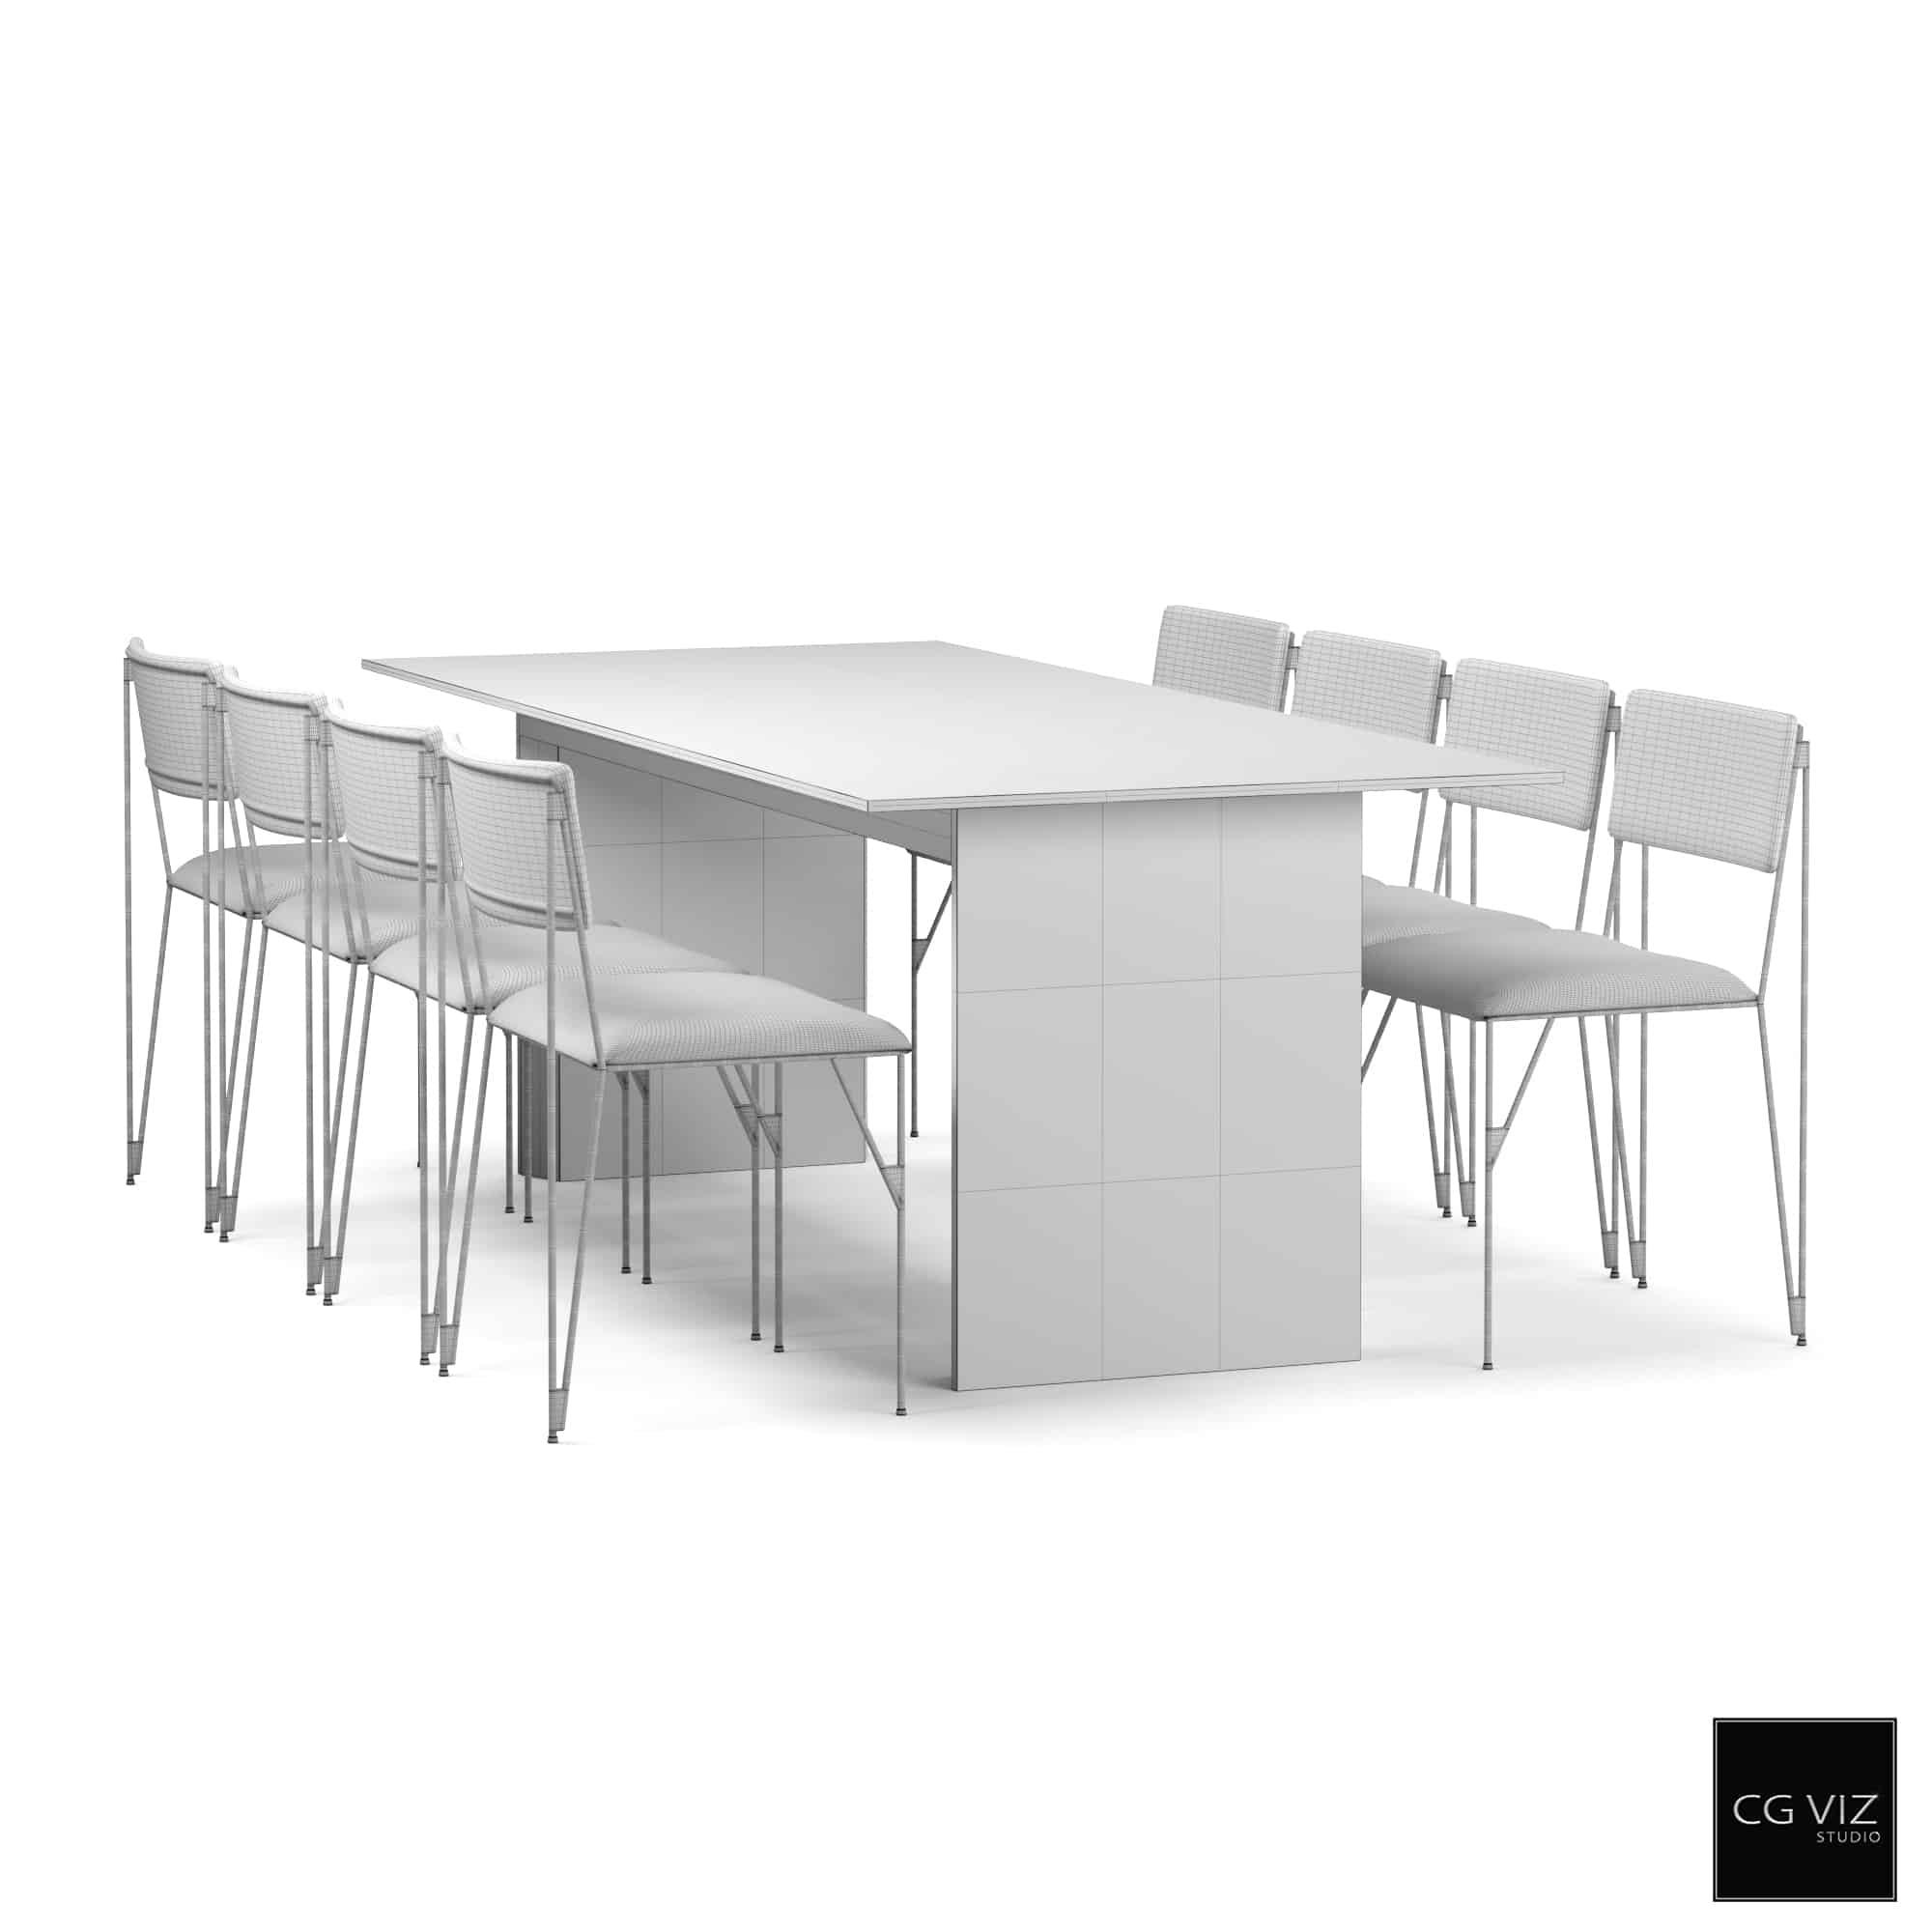 Wireframe View of Indoor Dining Set CGVAM_006 3D Model by CG Viz Studio